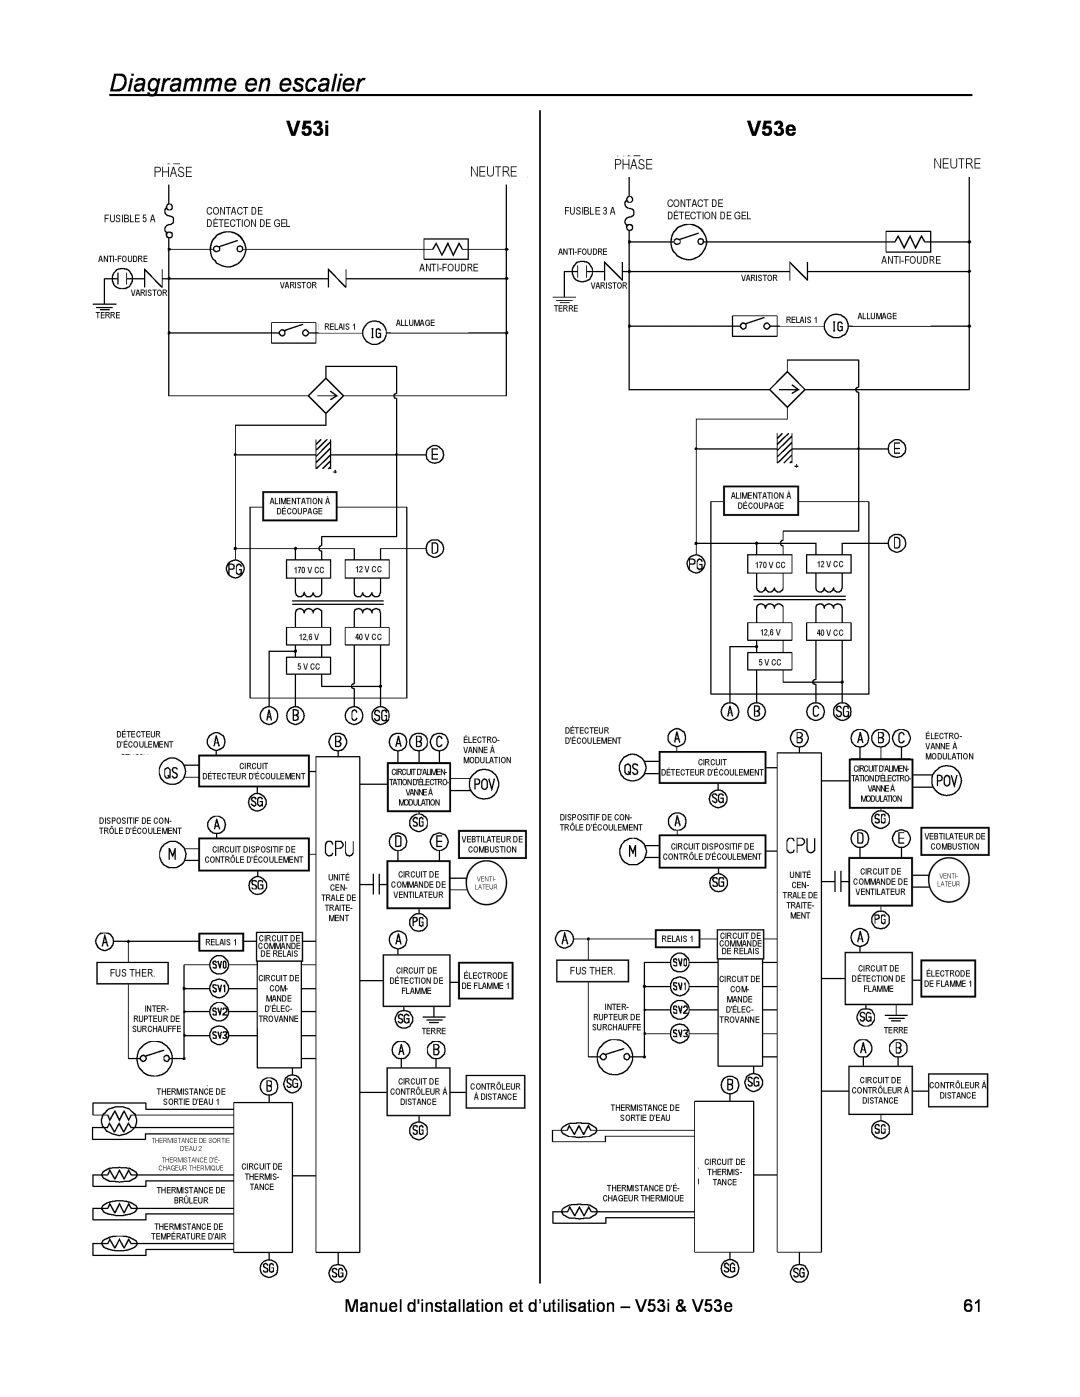 Rinnai V53I, V53E installation manual Diagramme en escalier, Phase 